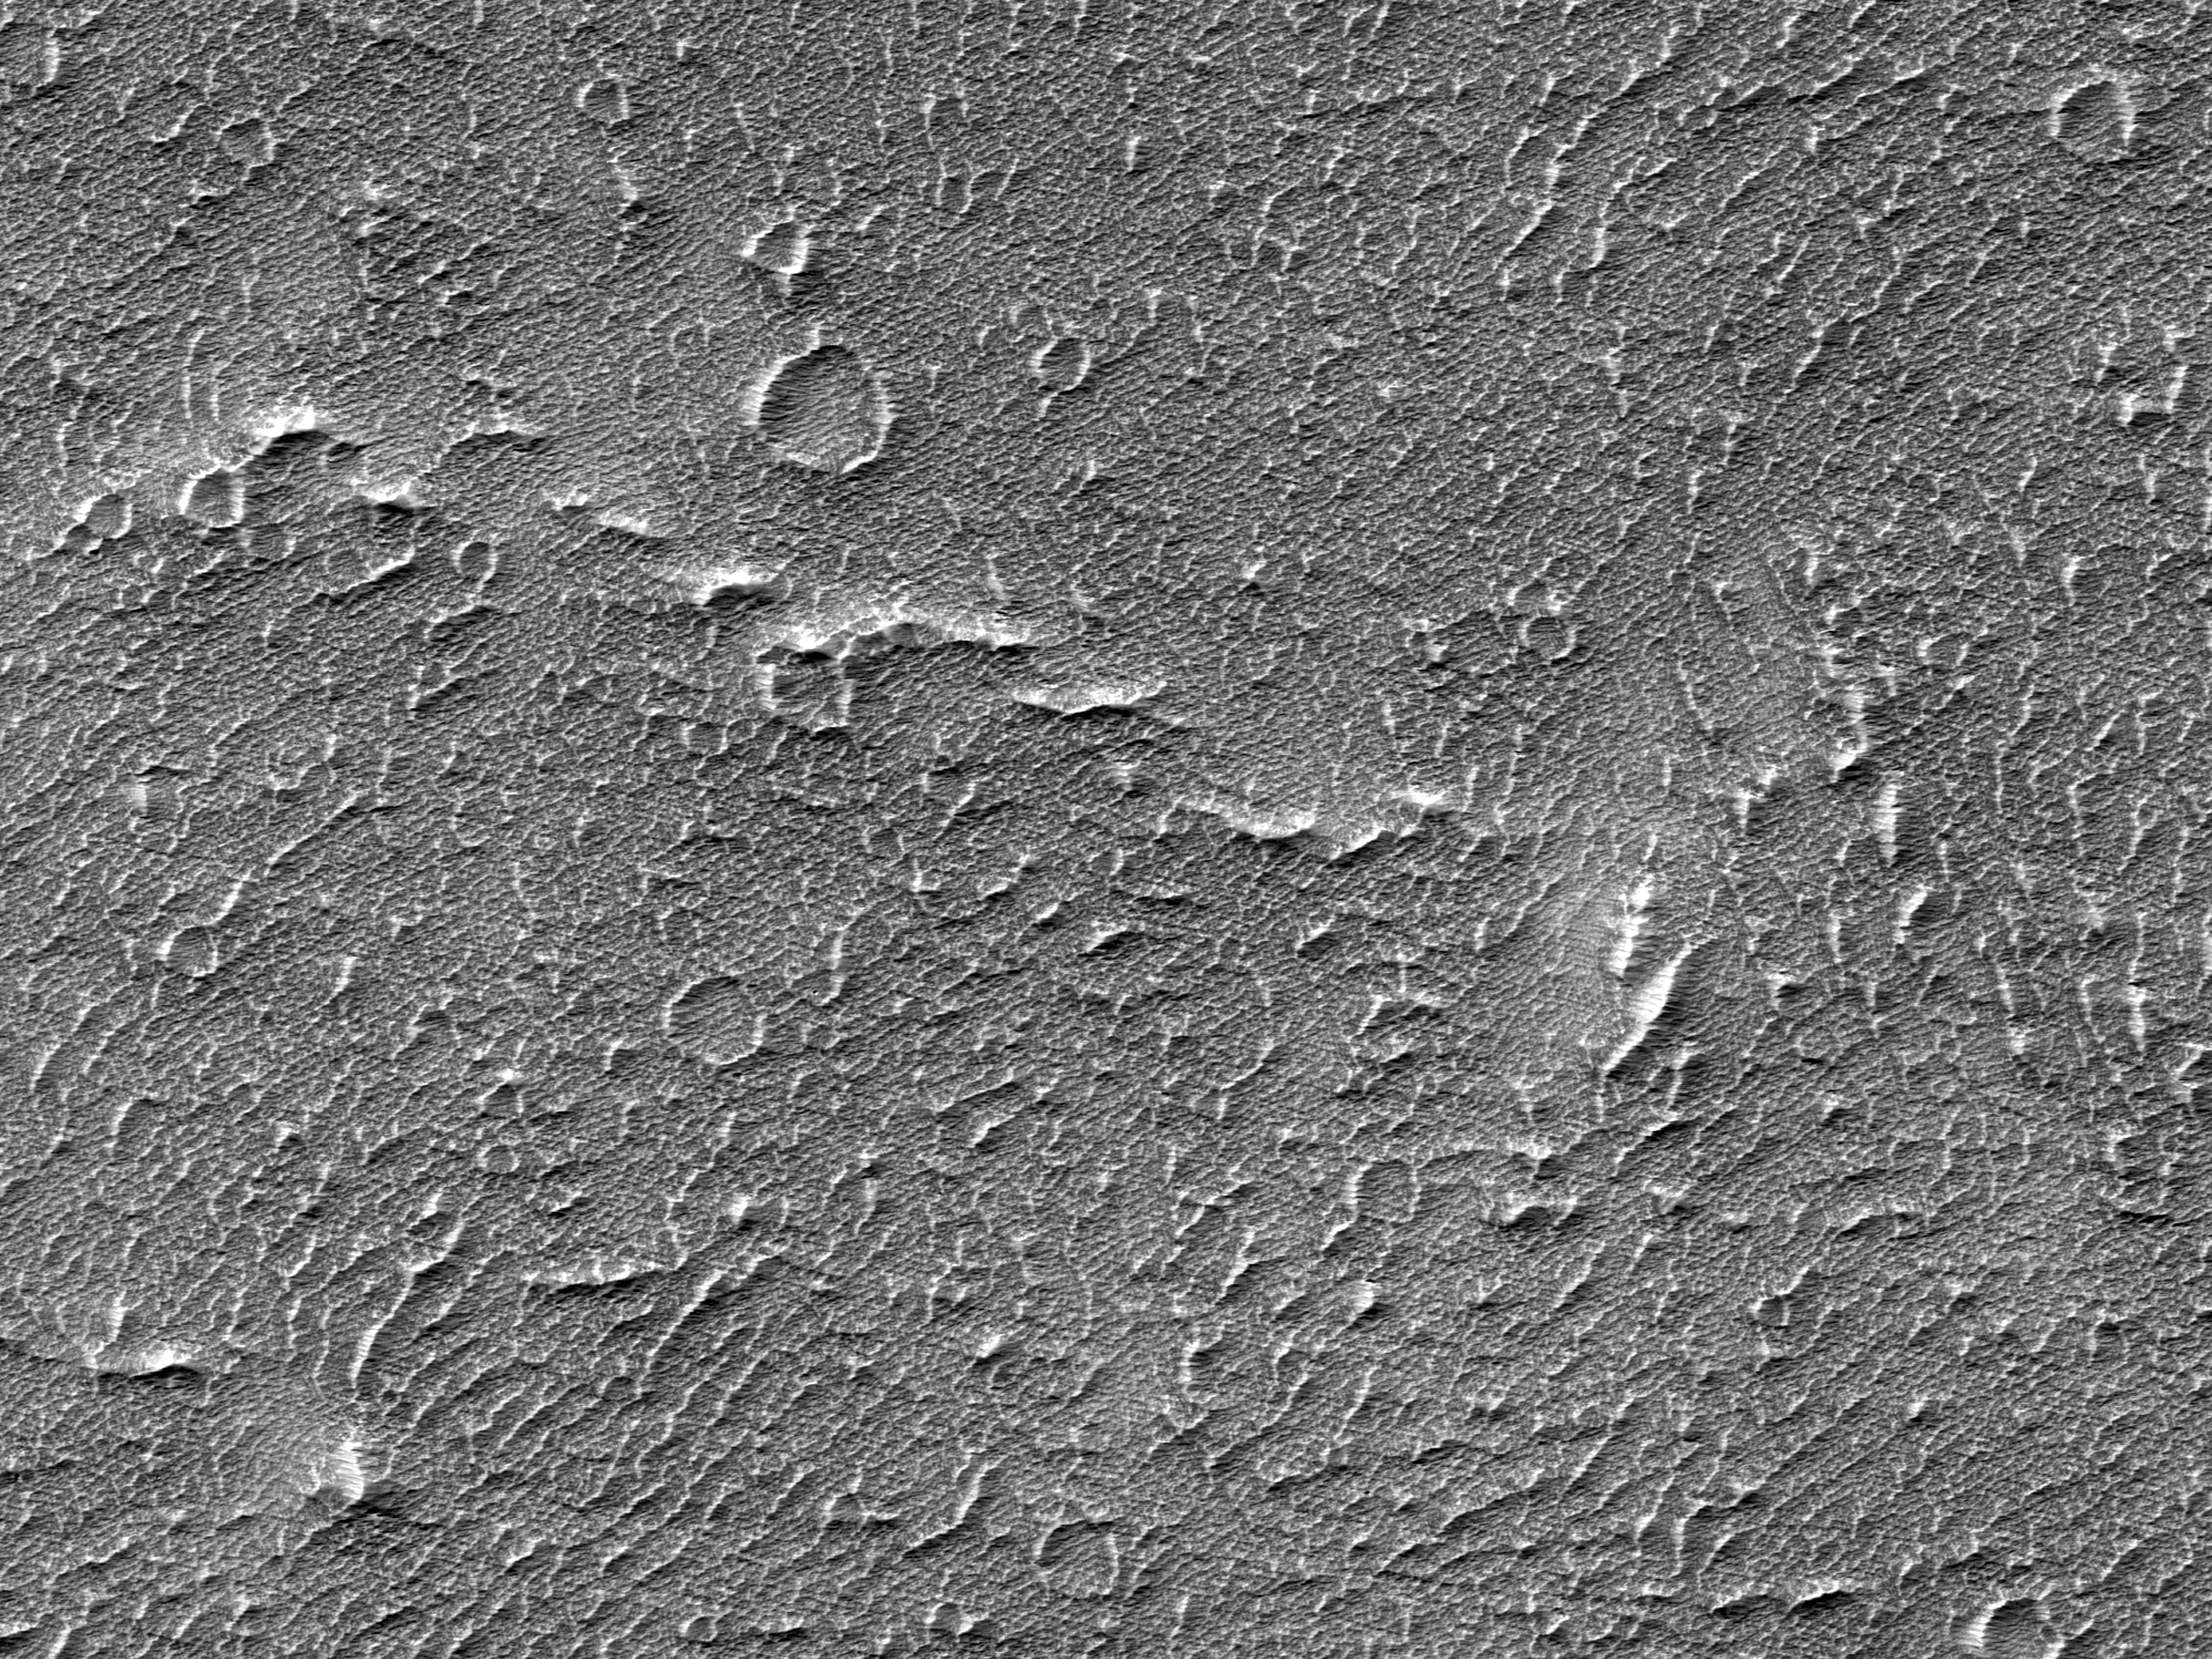 Campo de antigo fluxo de lava a oeste de Arsia Mons